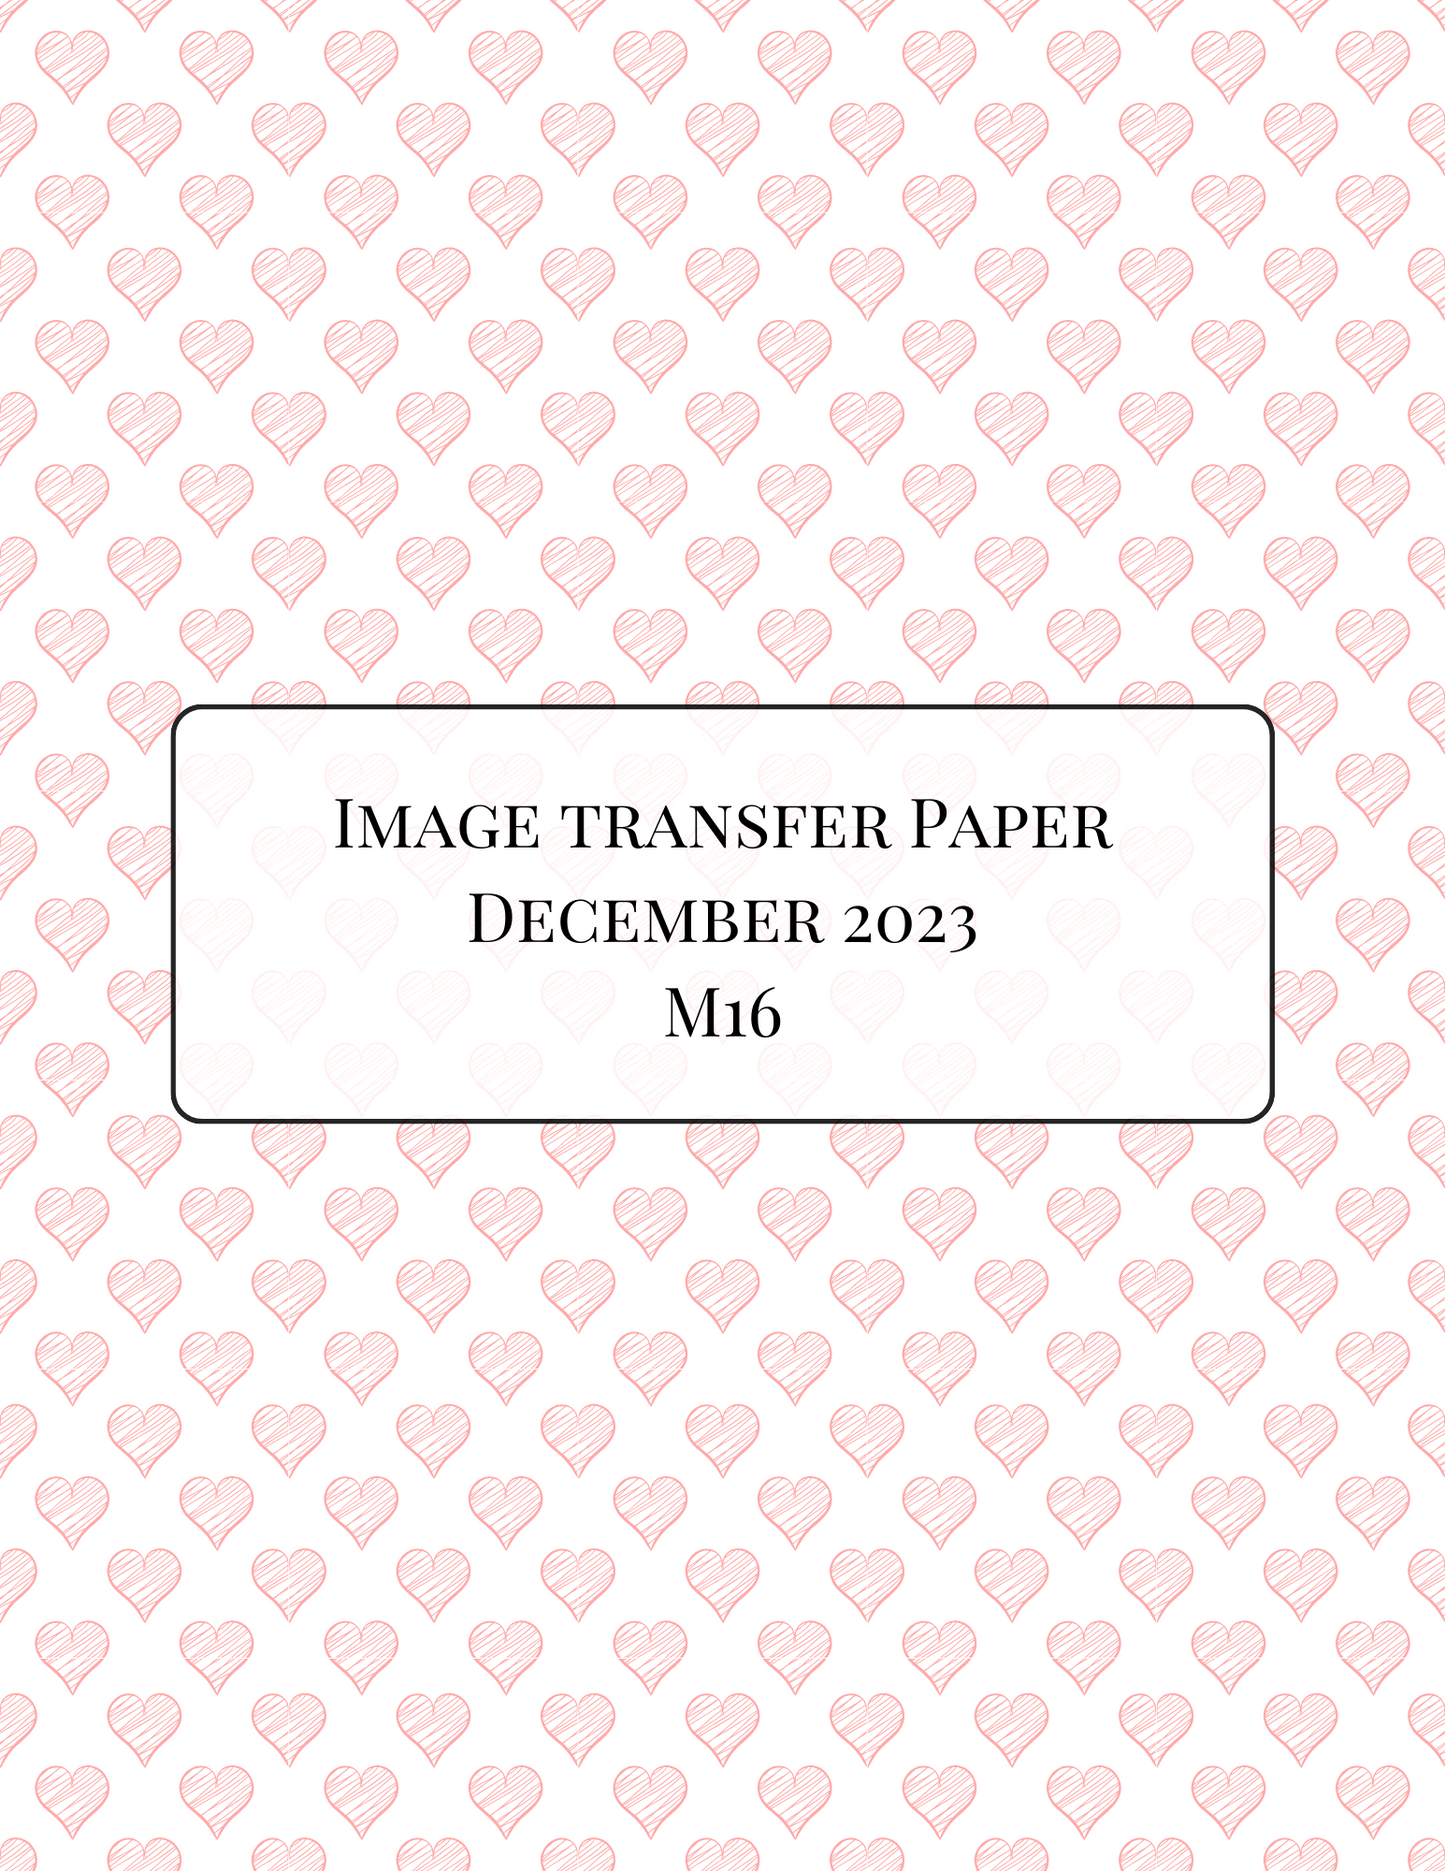 M16 Transfer Paper - December 2023 Launch